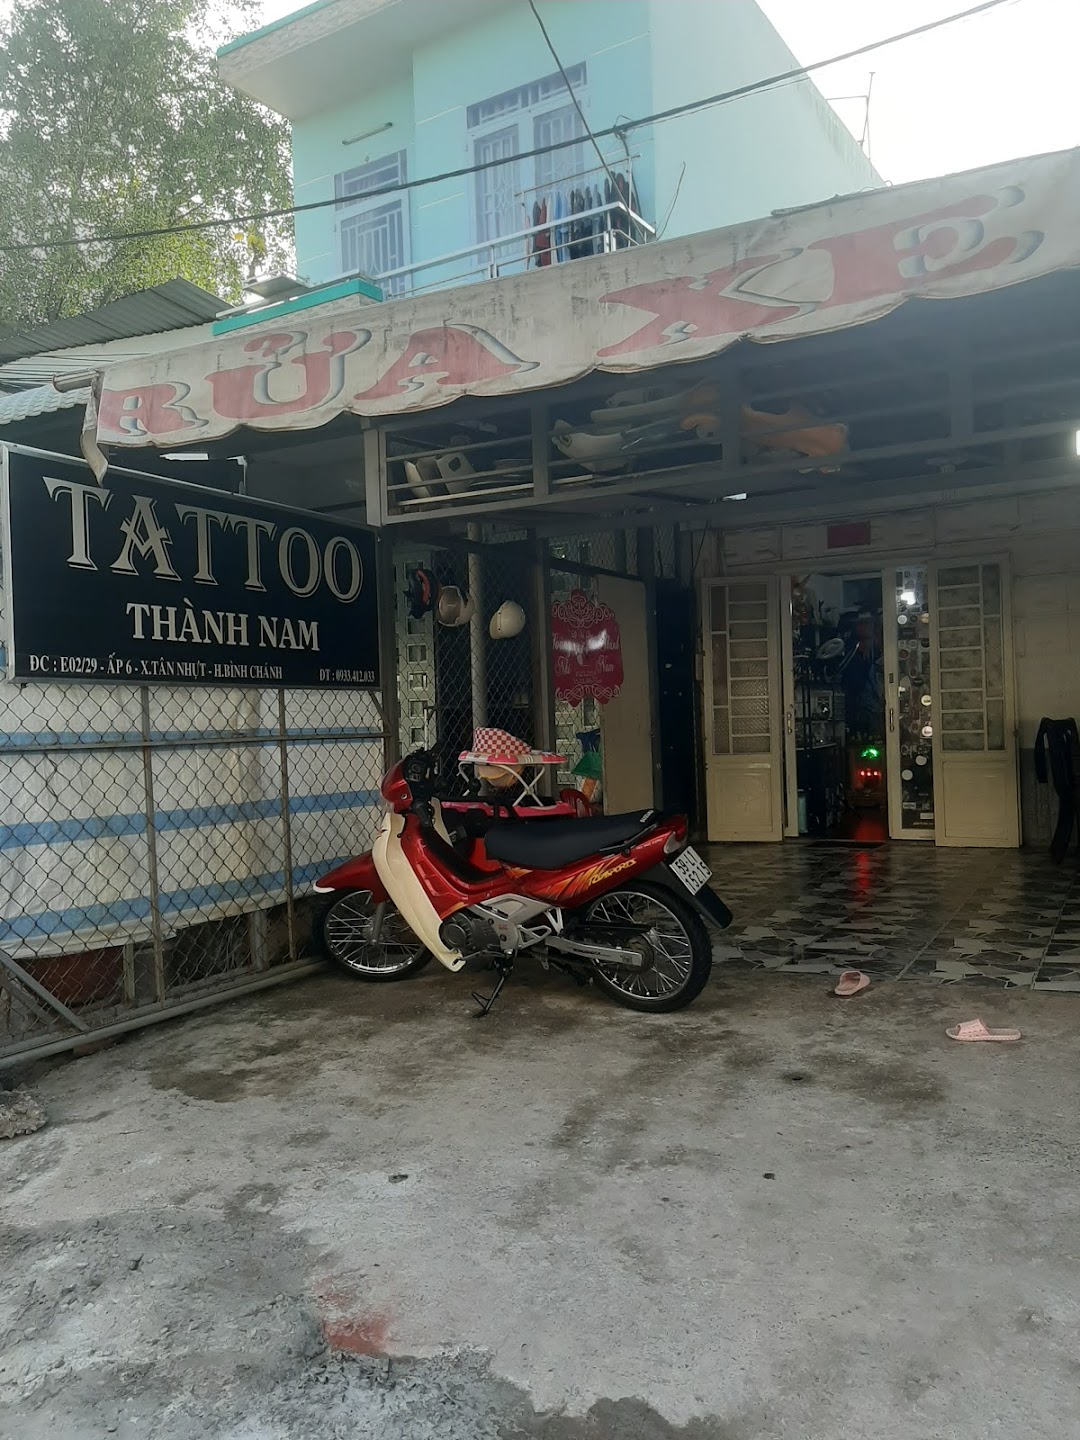 Thành Nam Tattoo